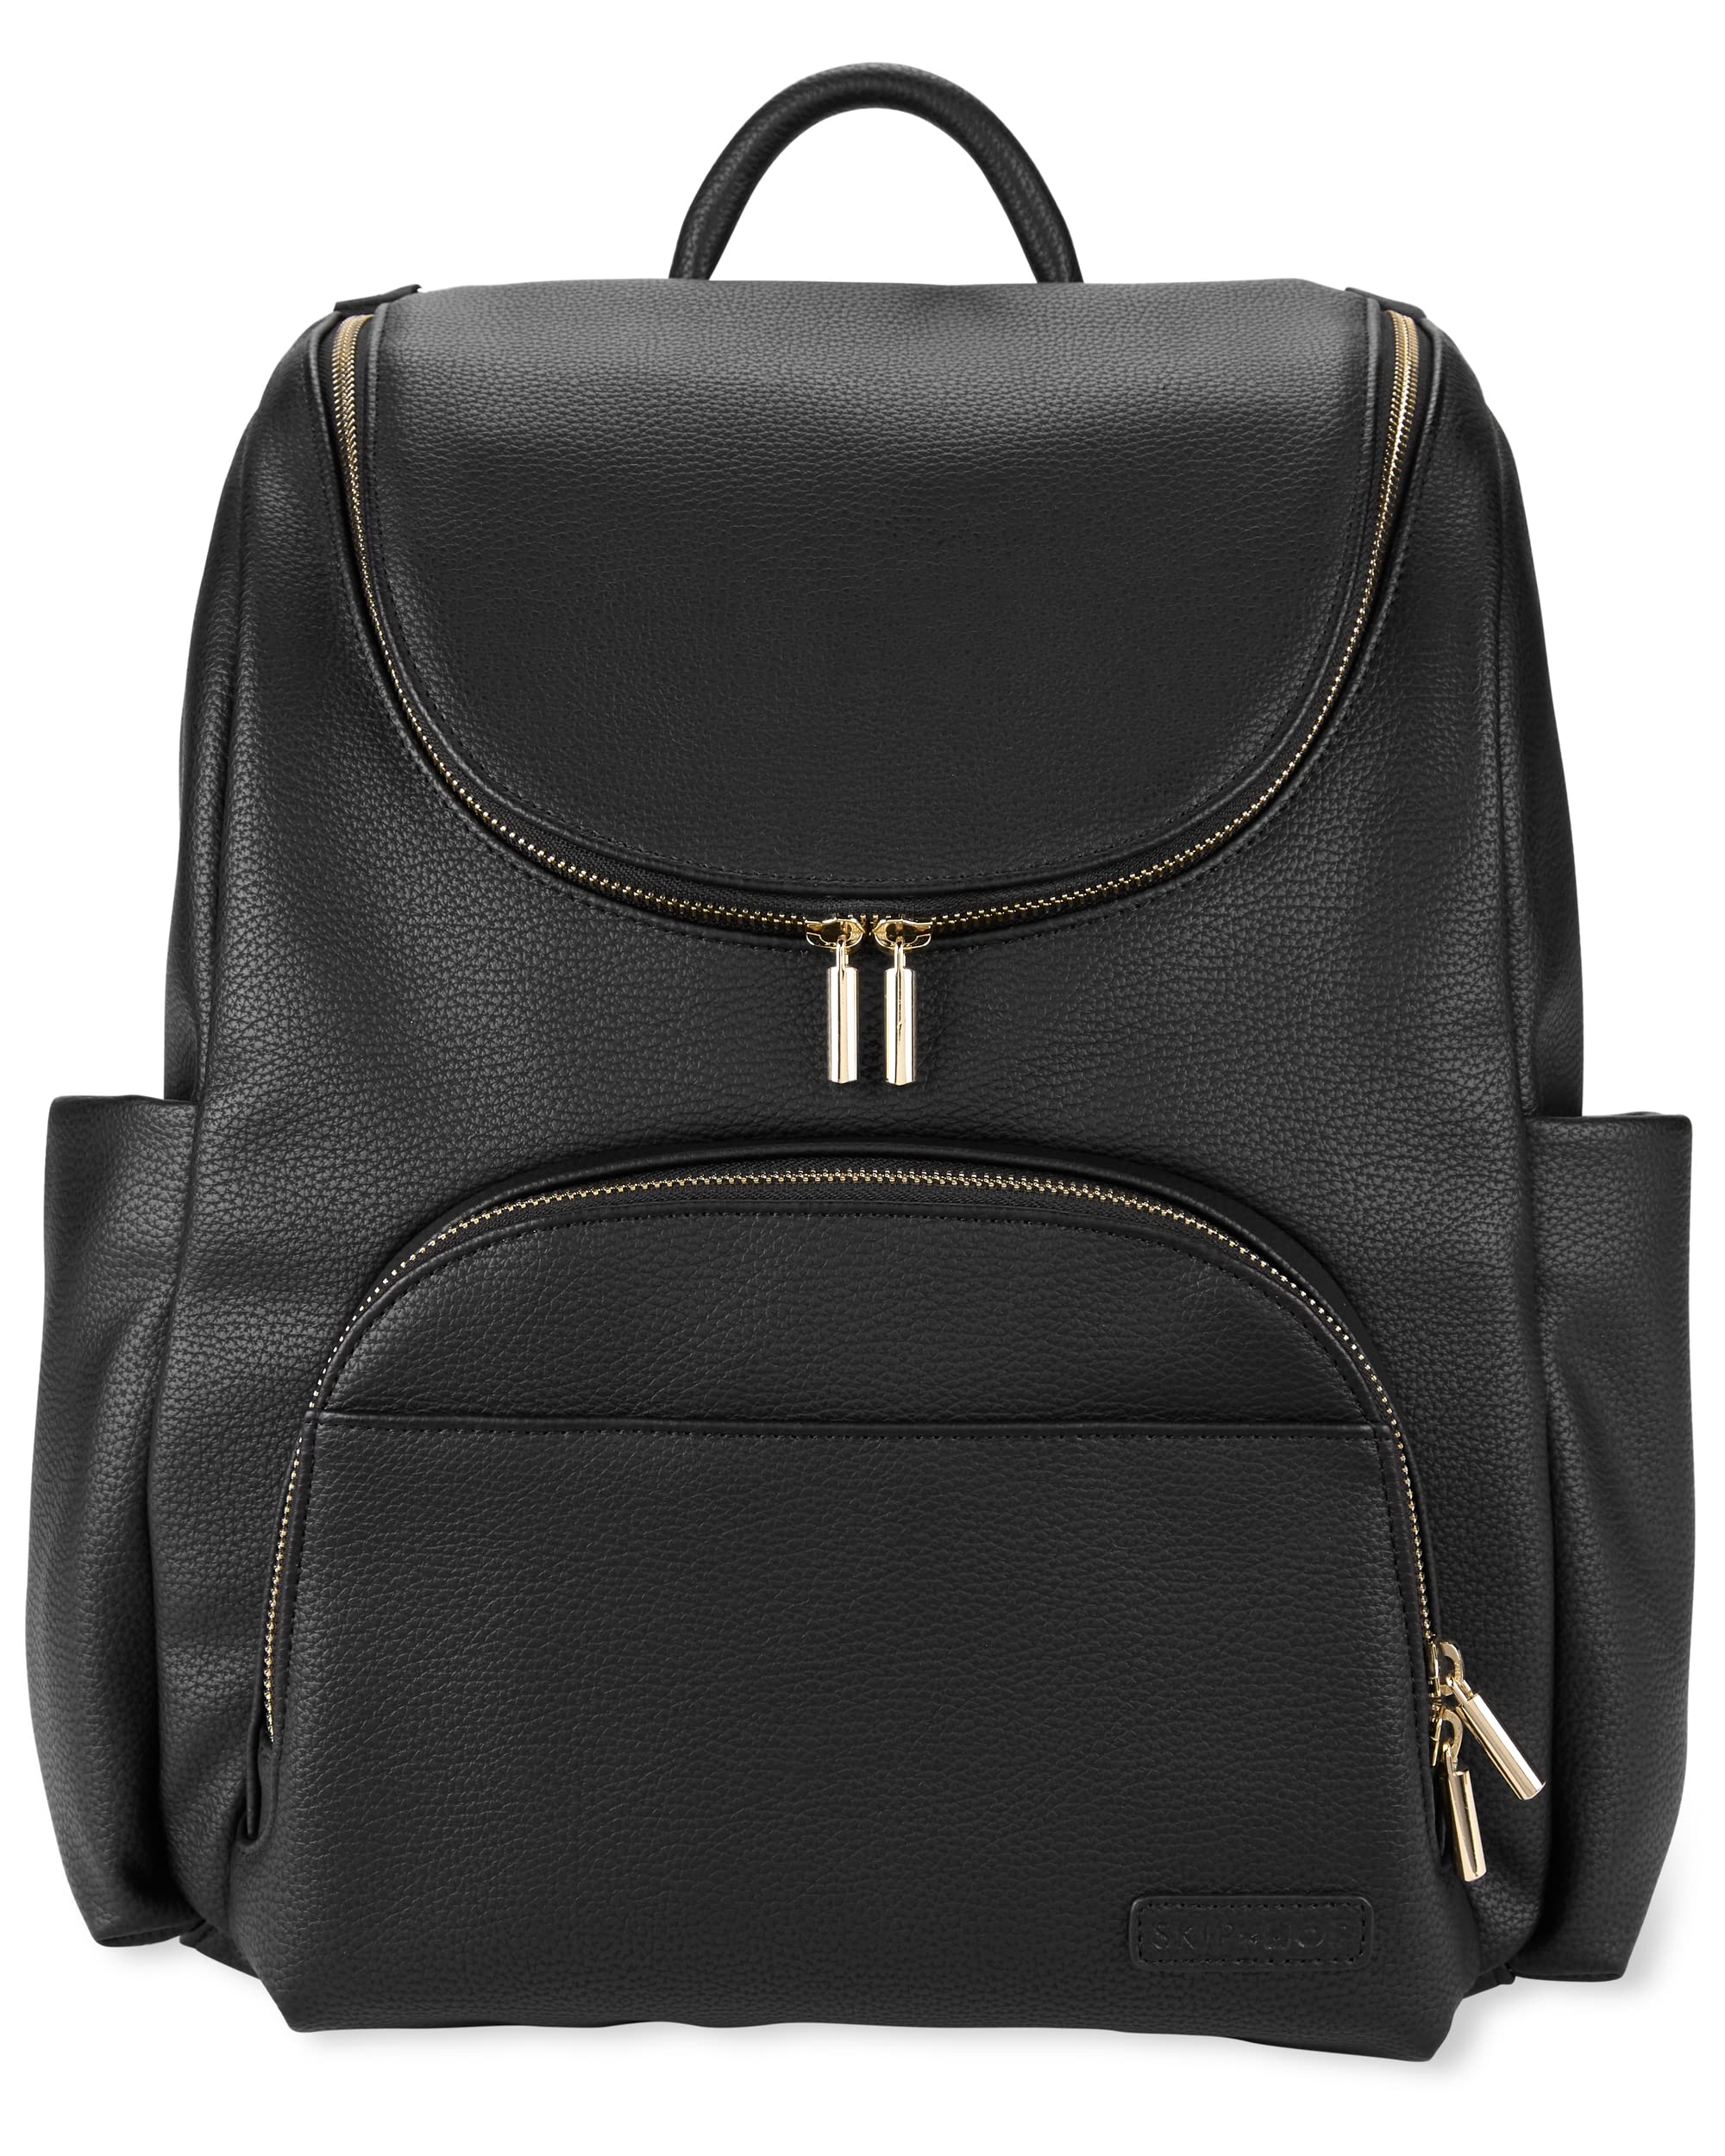 Skip Hop Diaper Bag Backpack: Evermore, Multi-Function Baby Travel Bag 6 in 1, Black